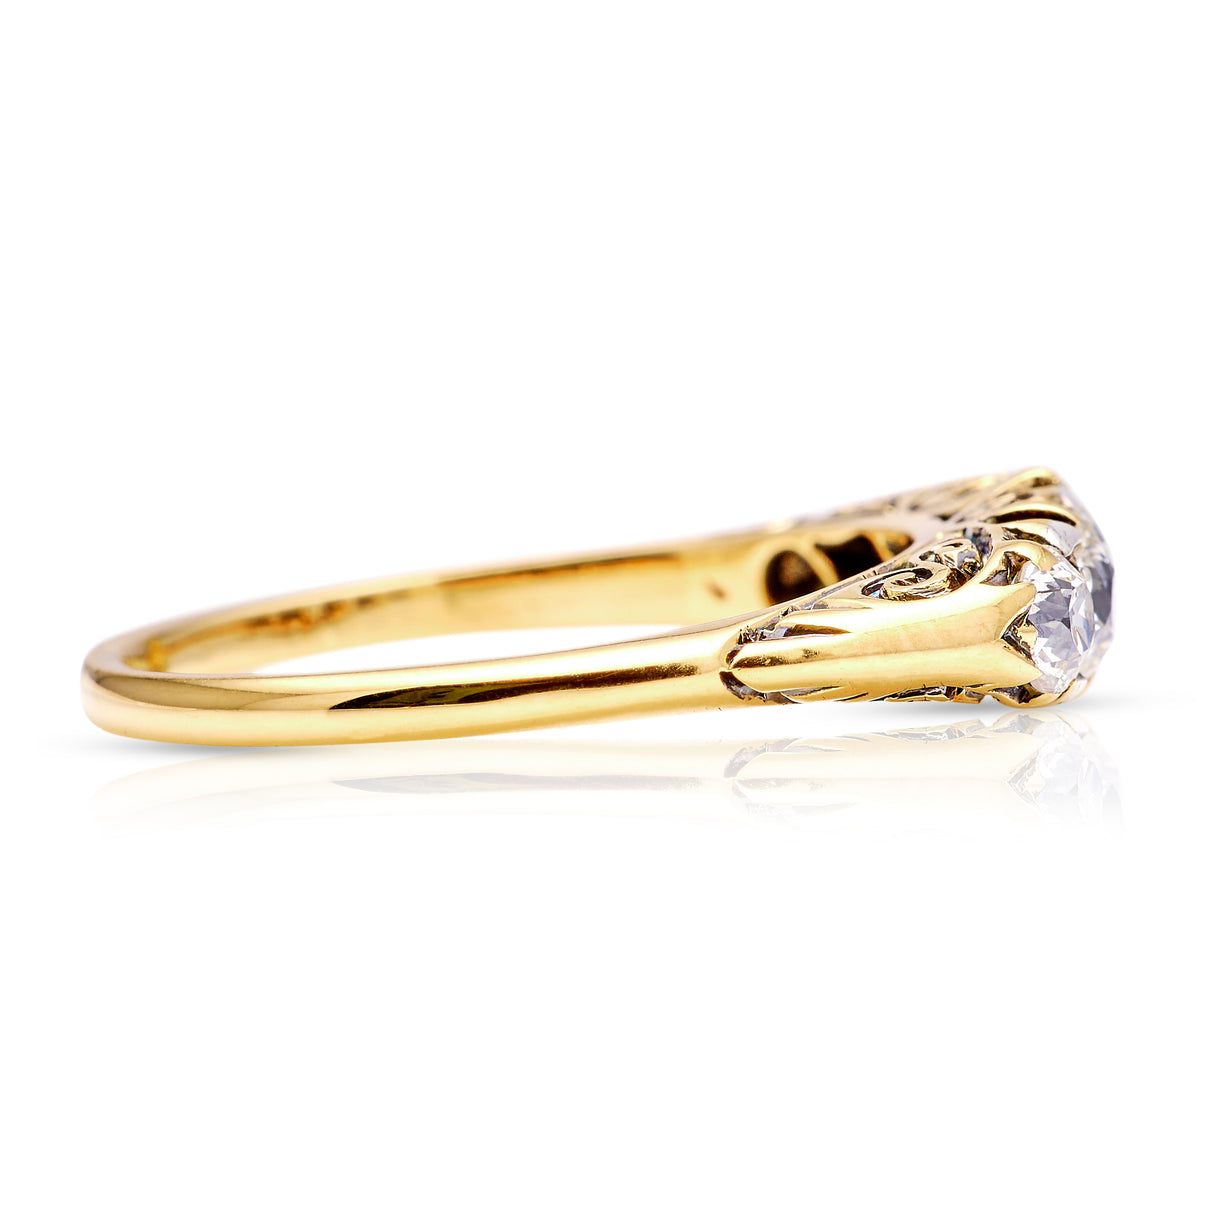 Antique, Edwardian diamond half hoop engagement ring